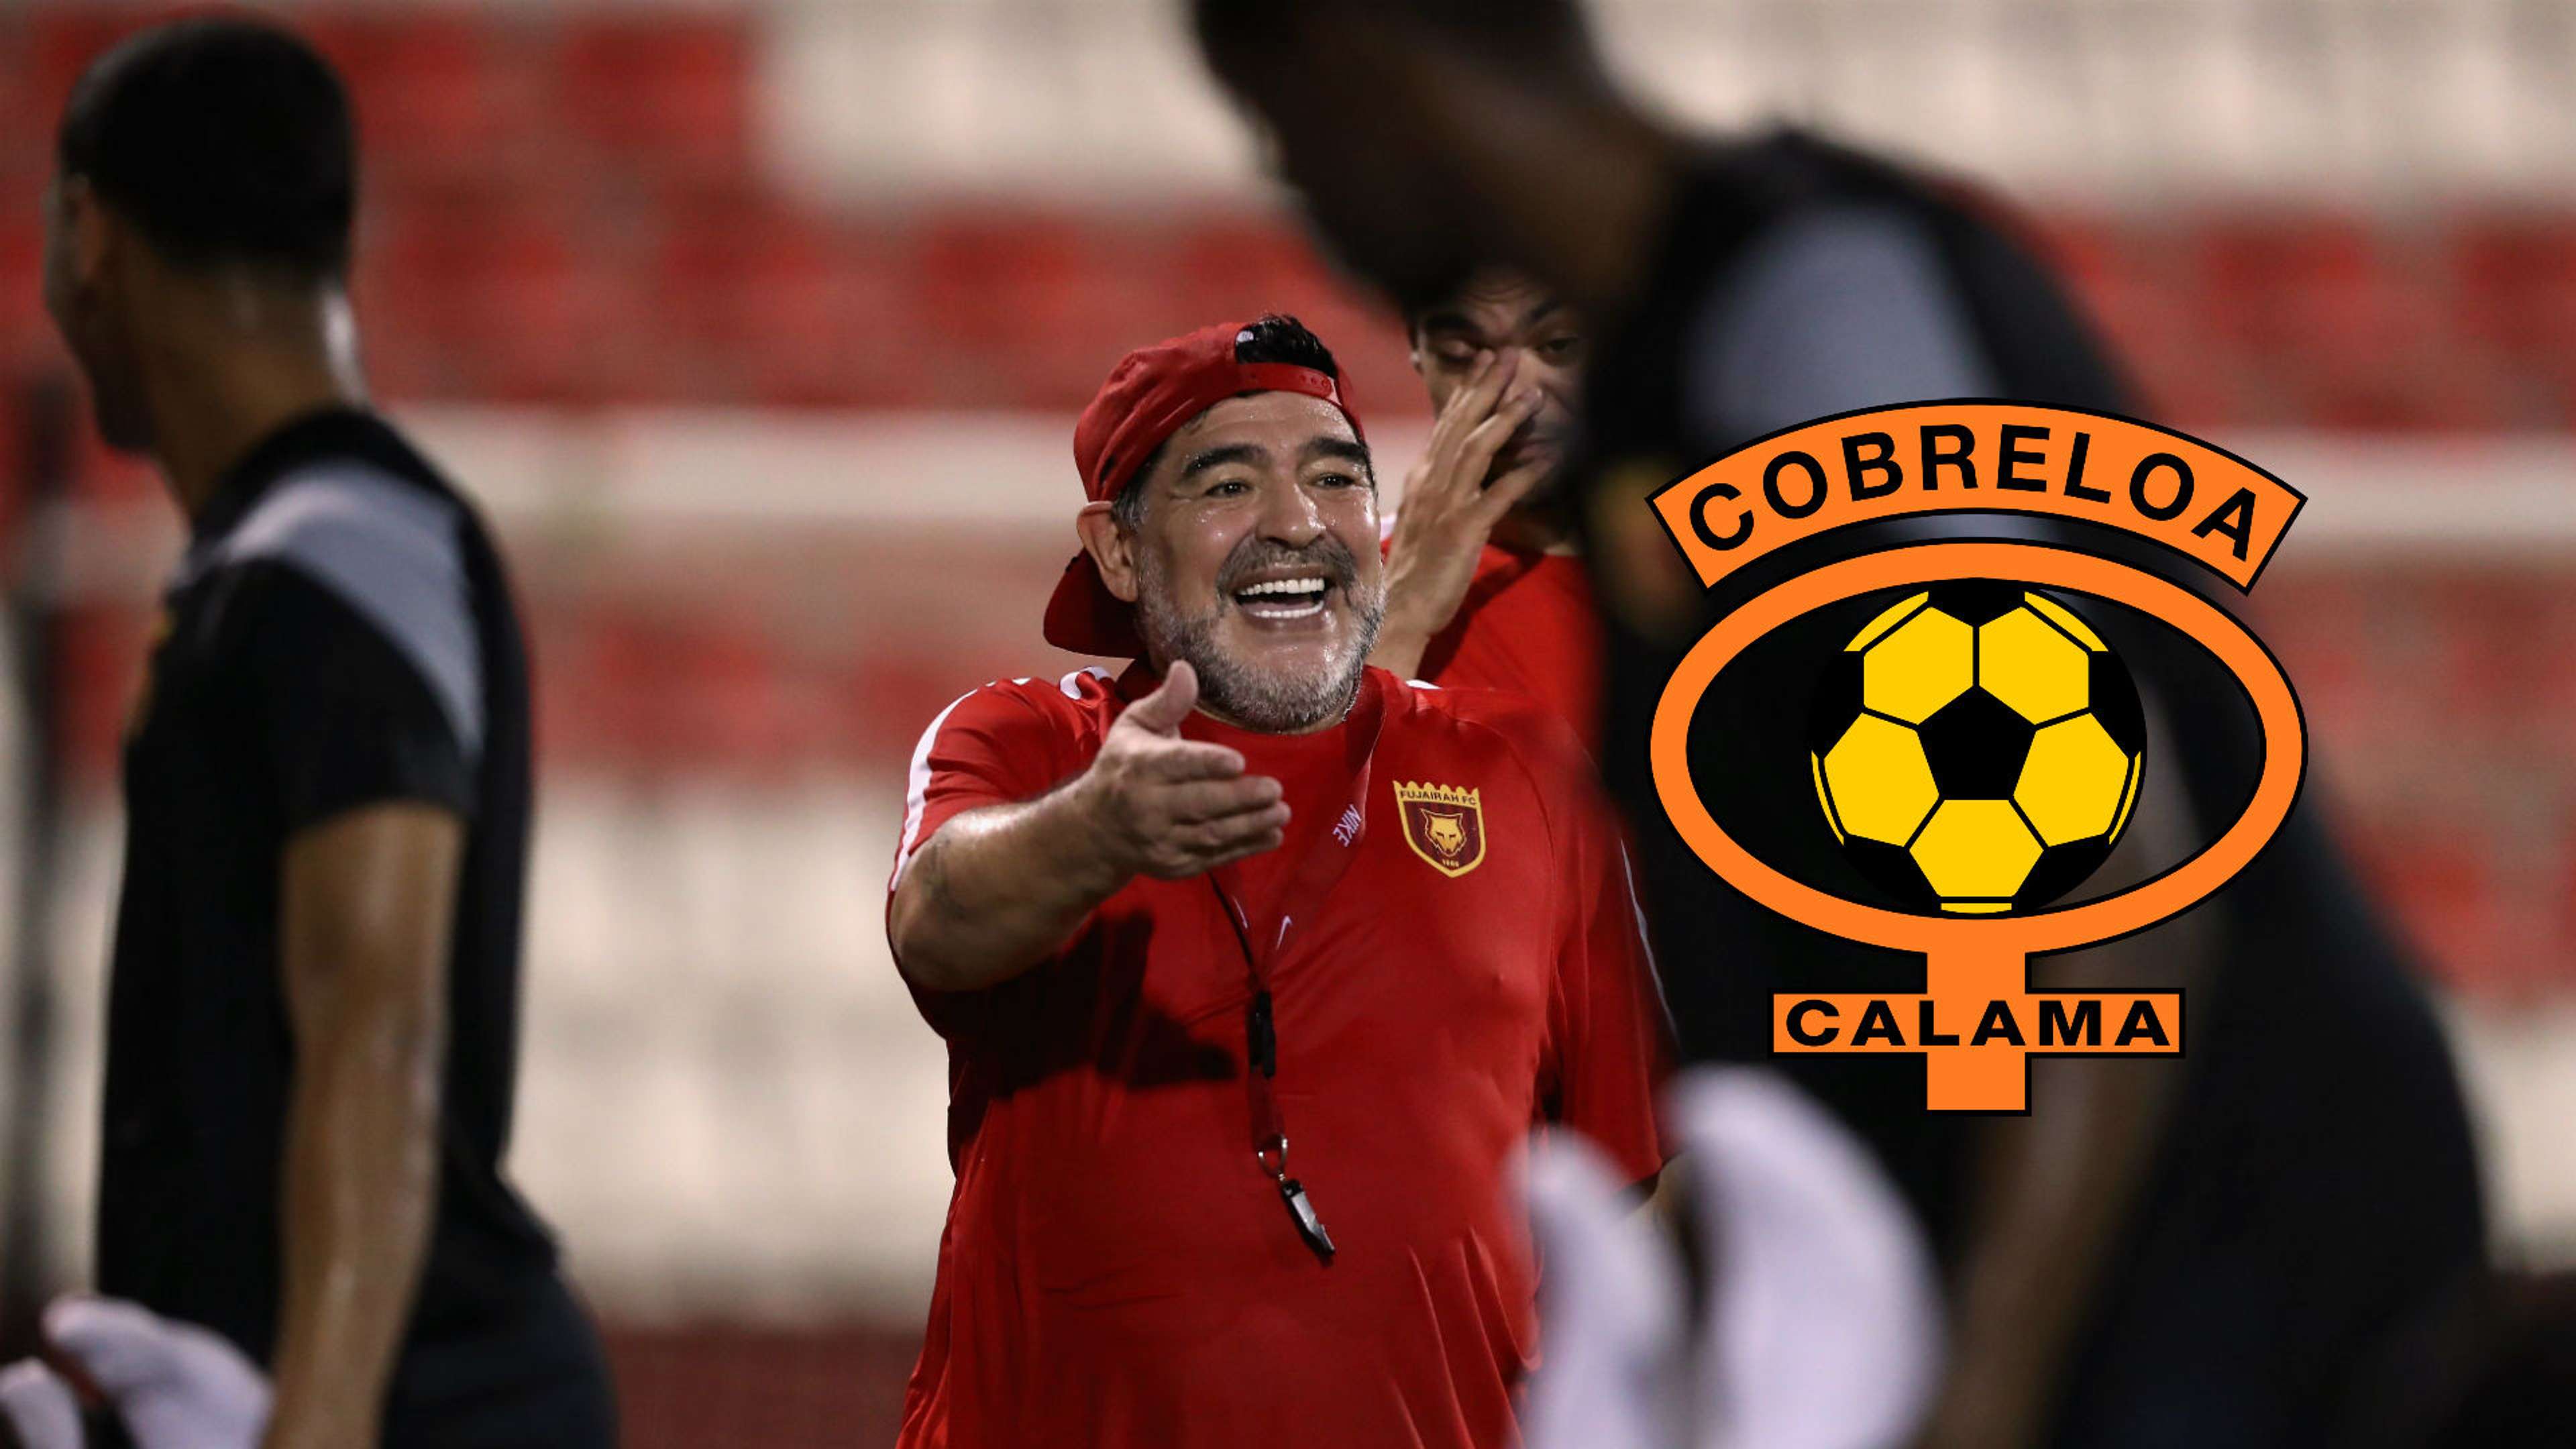 Diego Maradona - Cobreloa